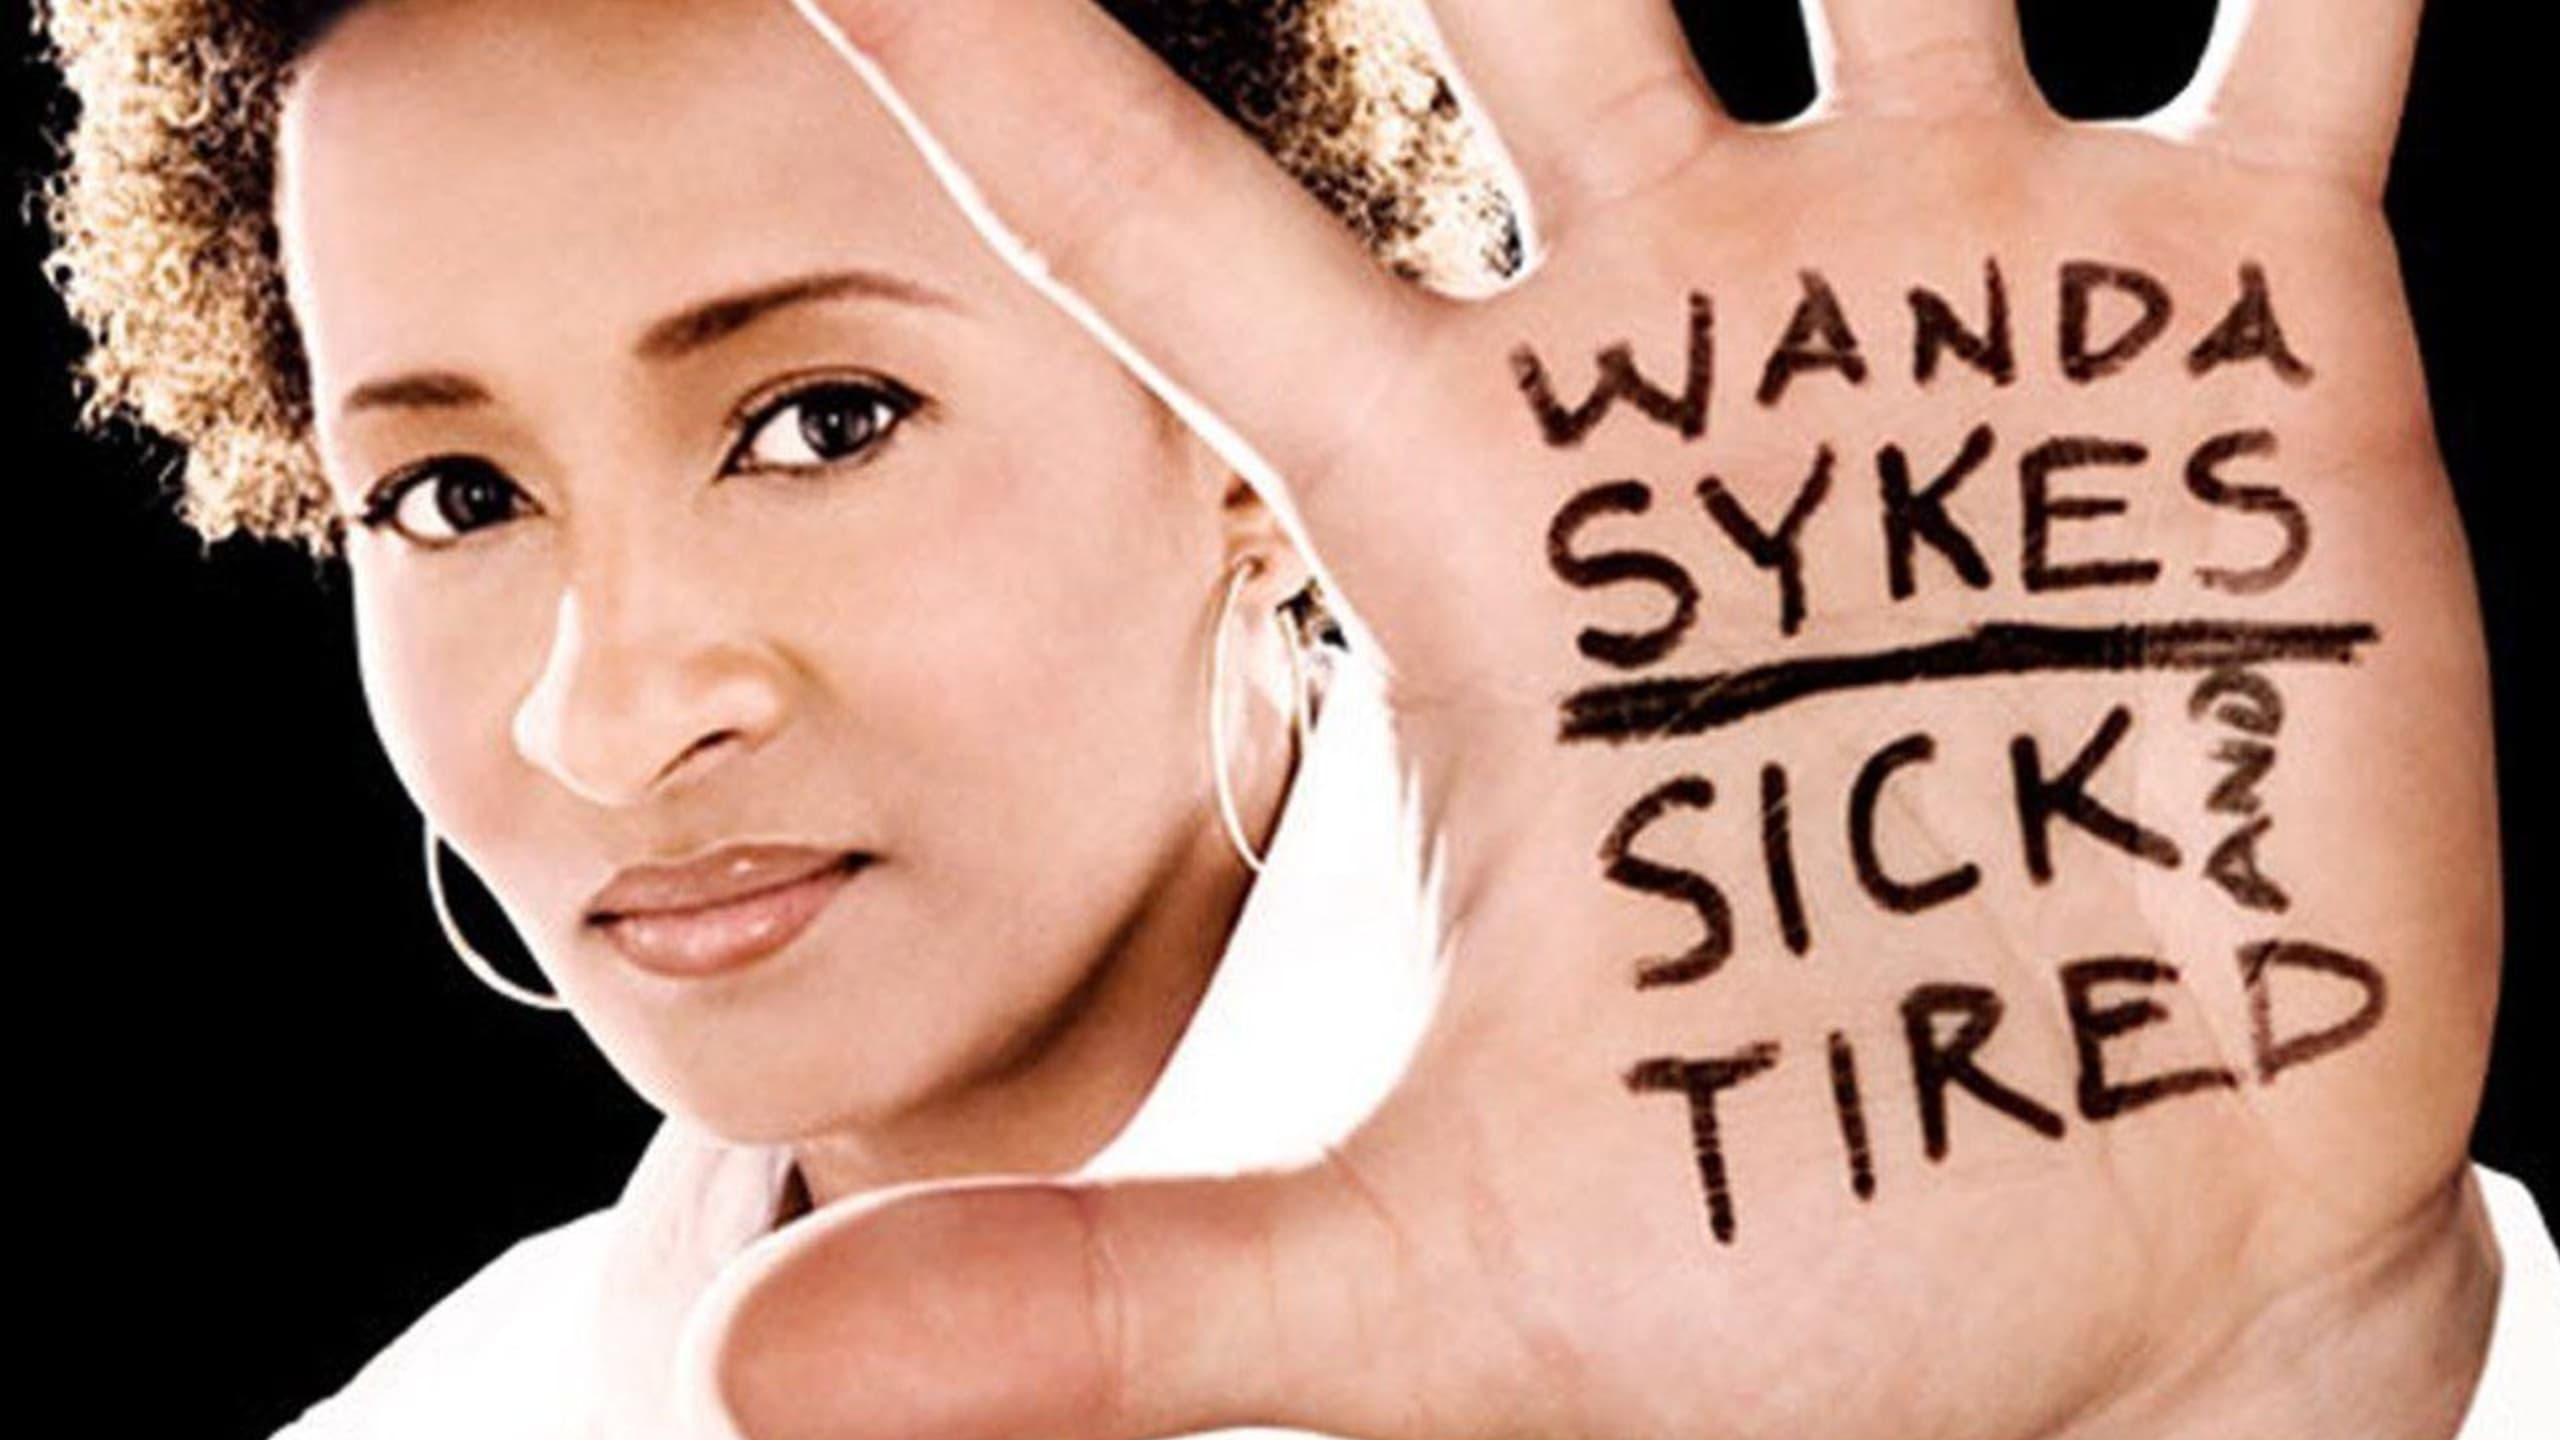 Wanda Sykes: Sick and Tired